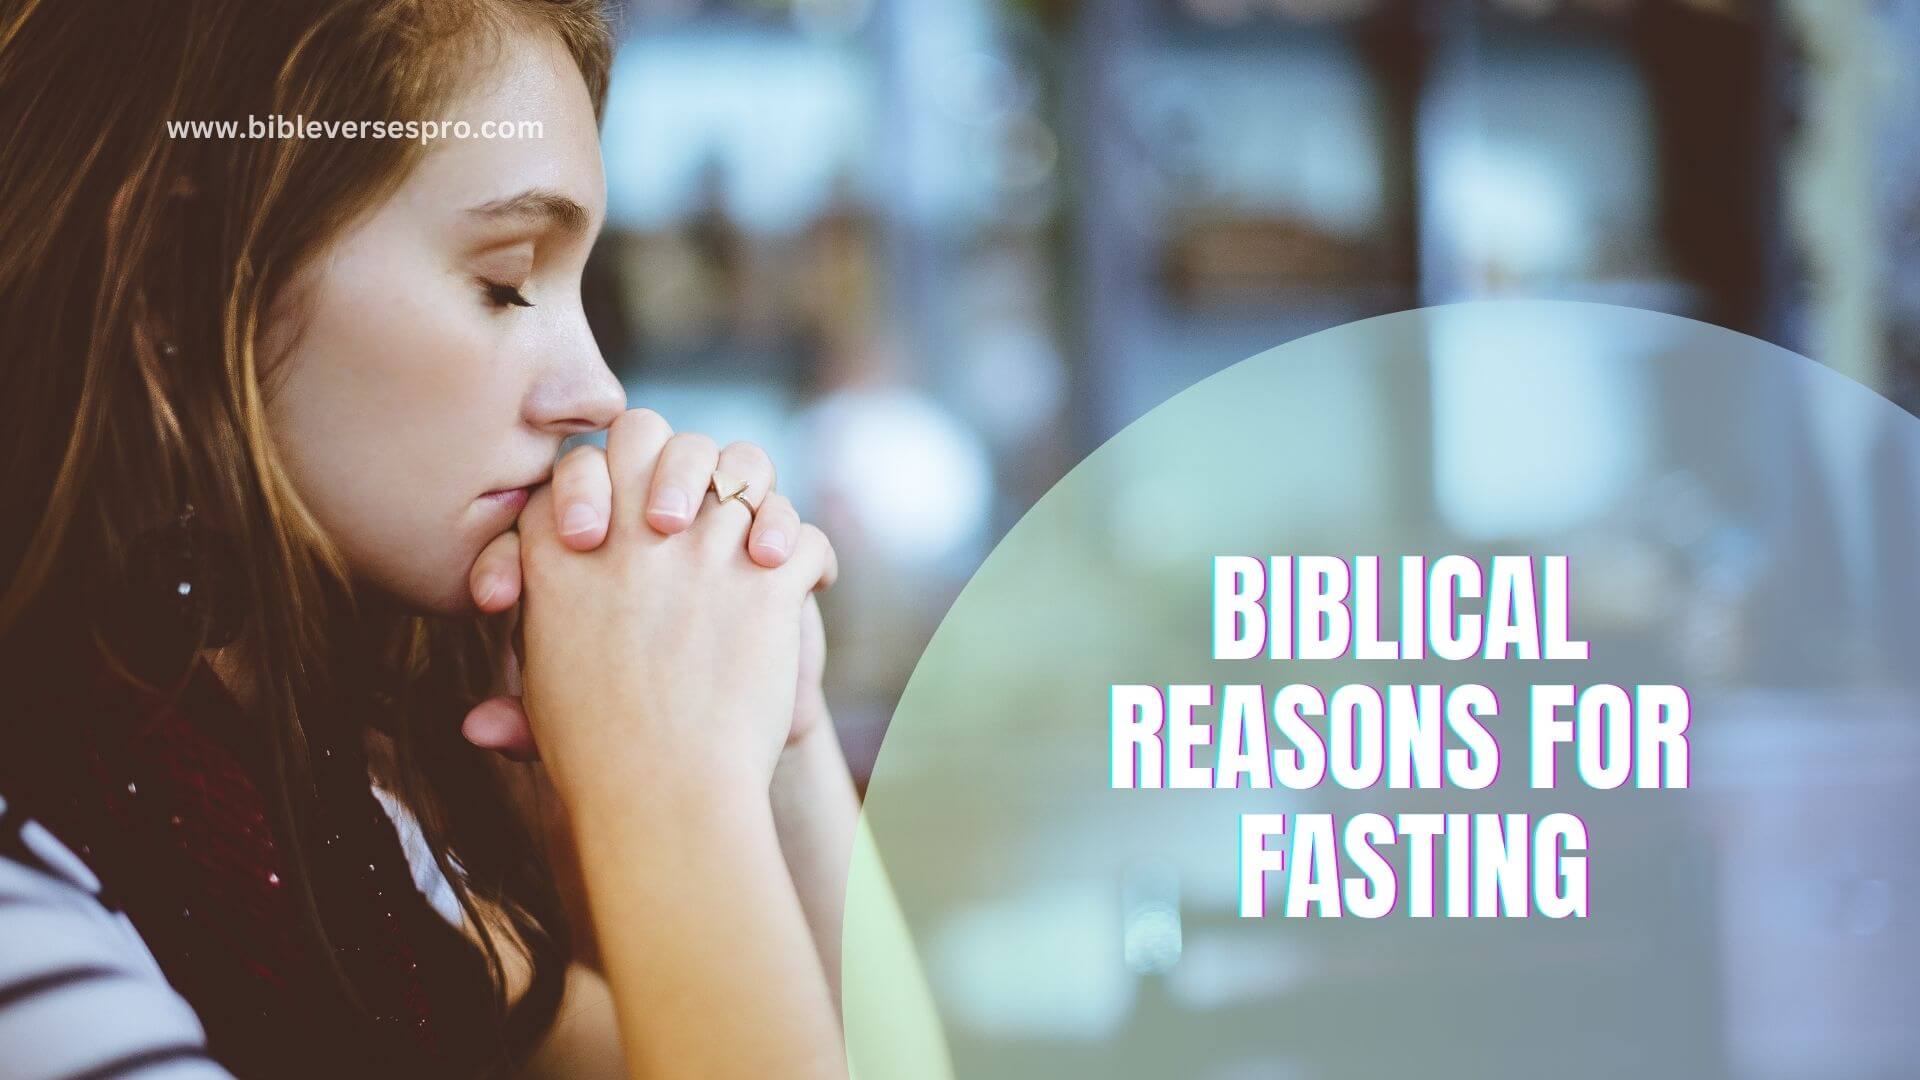 BIBLICAL REASONS FOR FASTING